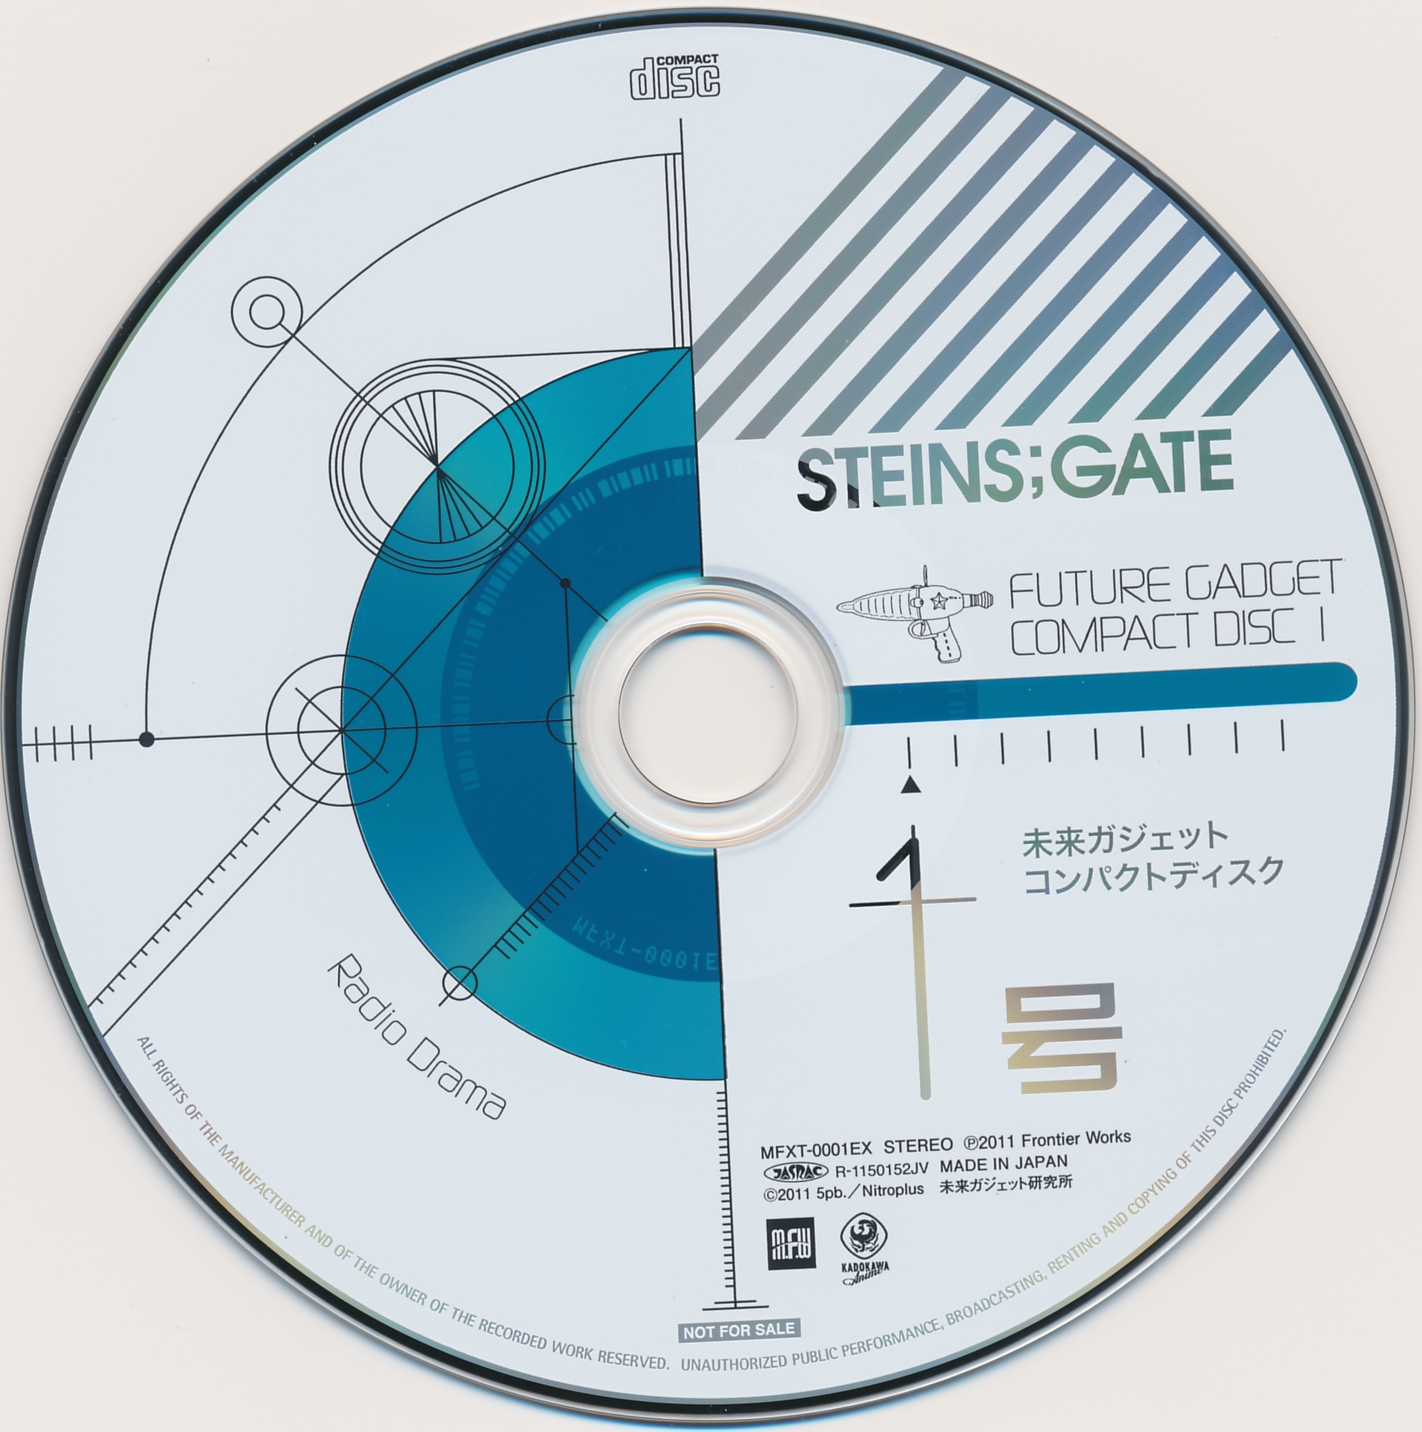 光碟-STEINS;GATE FUTURE GADGET COMPACT DISC 1.jpg